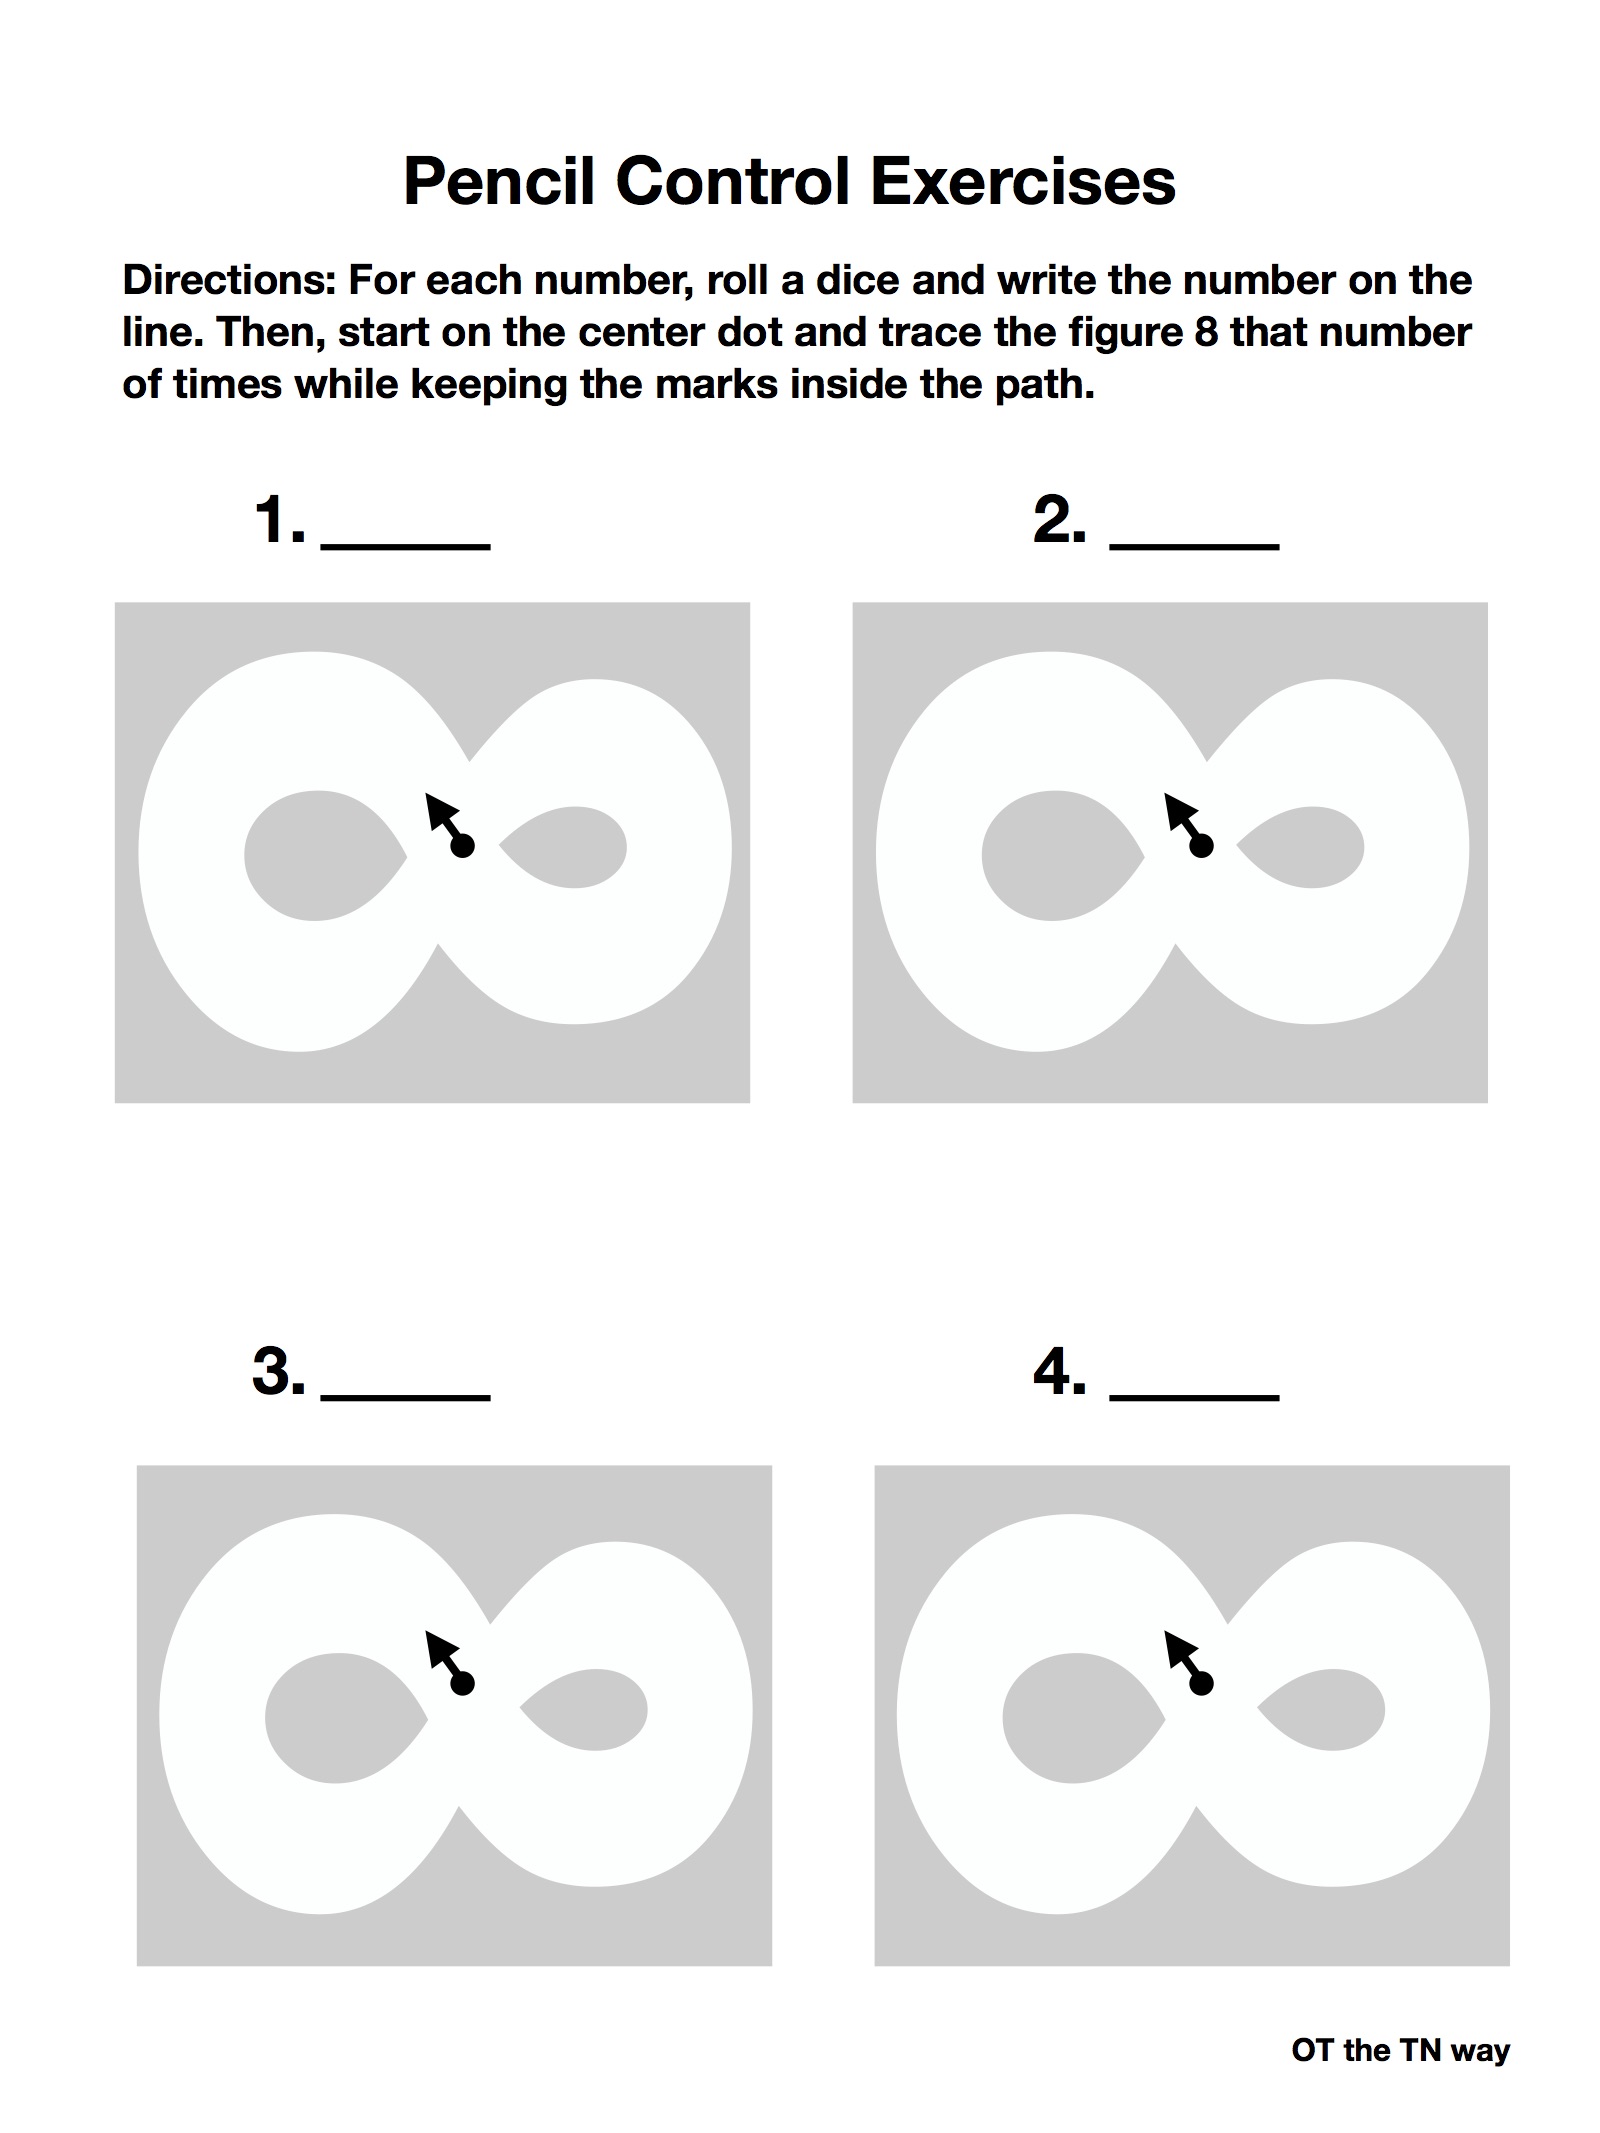 Pencil Control Exercises-Figure 8 image